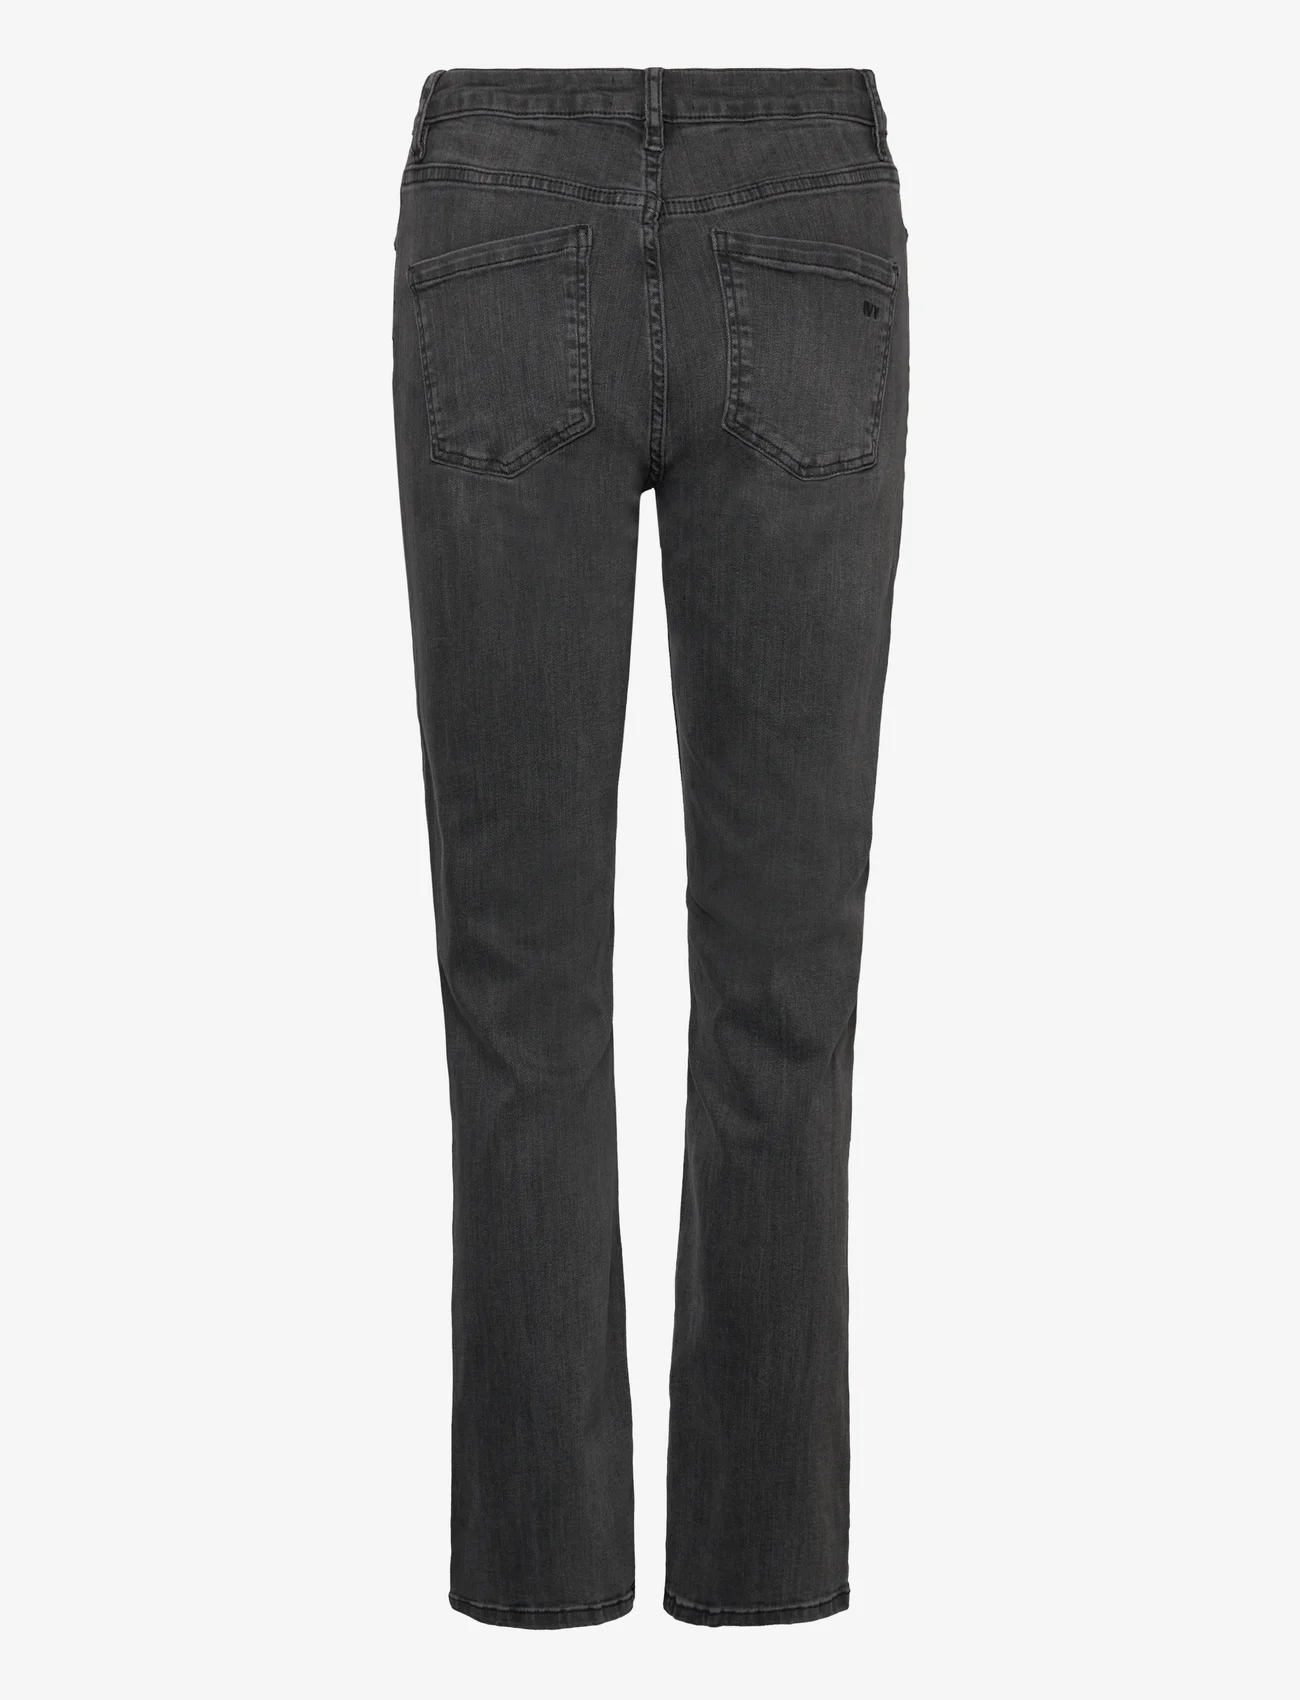 IVY Copenhagen - IVY-Lulu Jeans wash Bangkok Black - slim jeans - black - 1